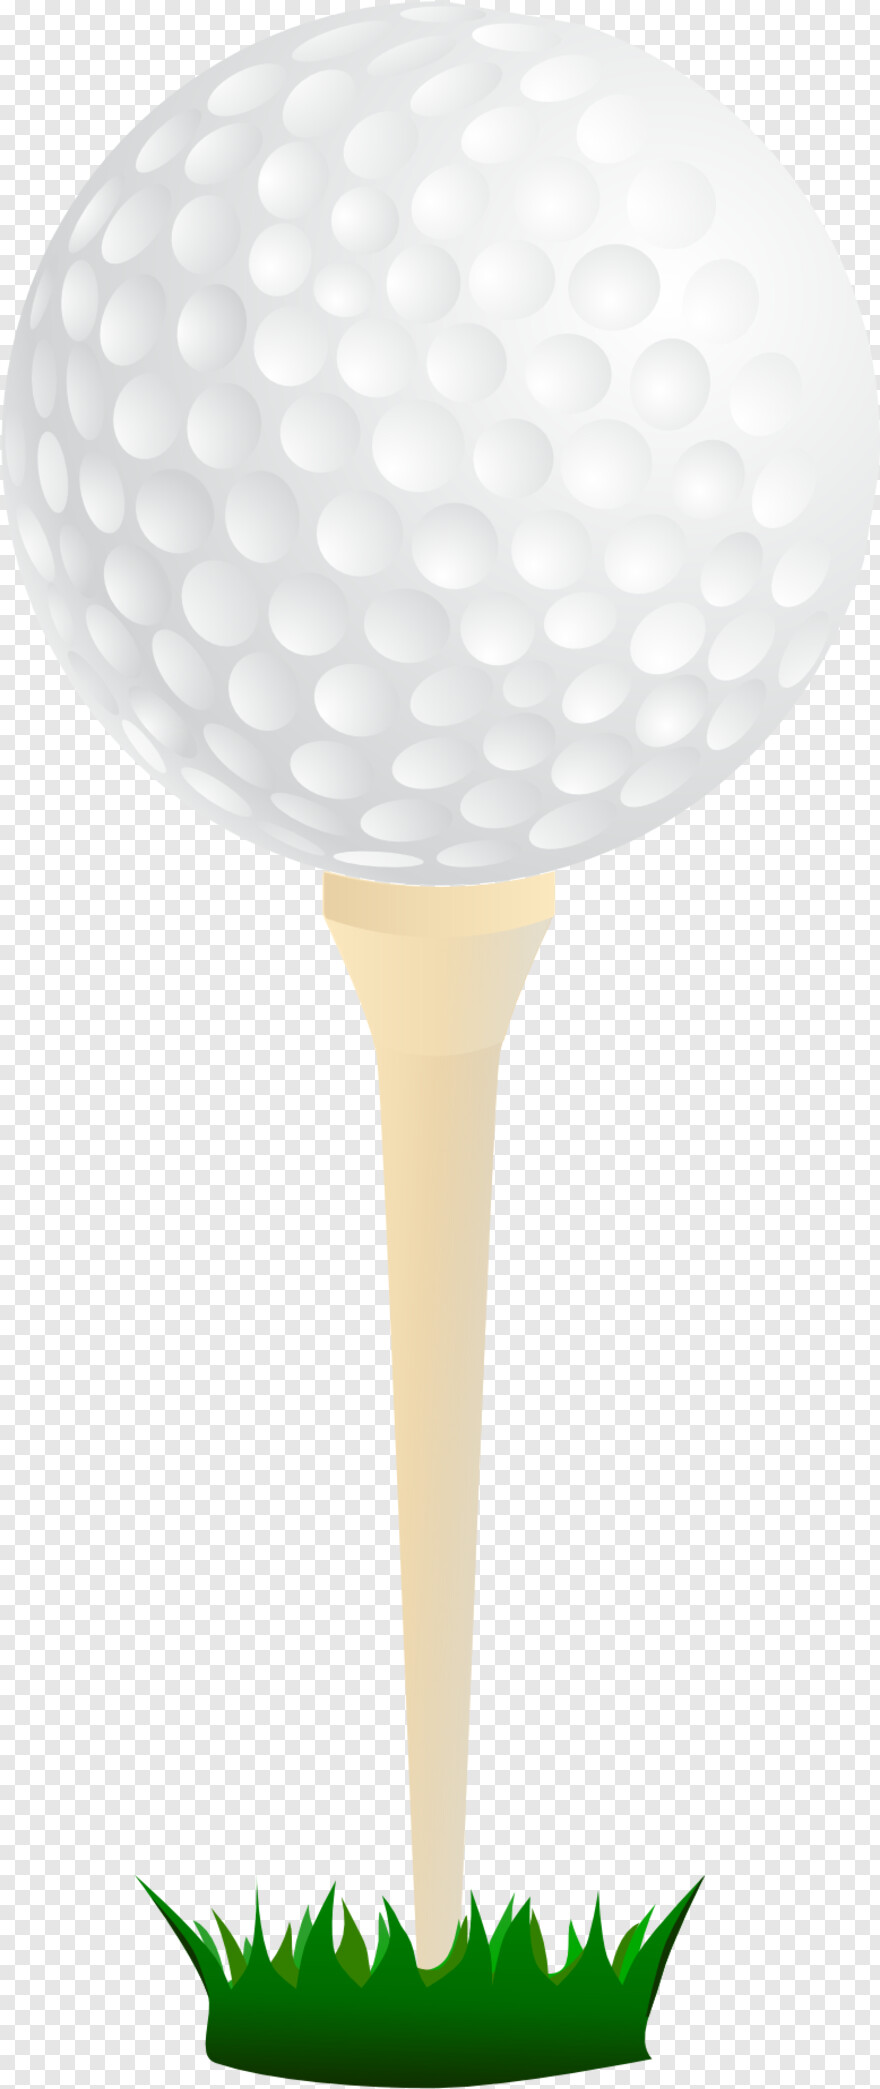 golf-ball-on-tee # 419362